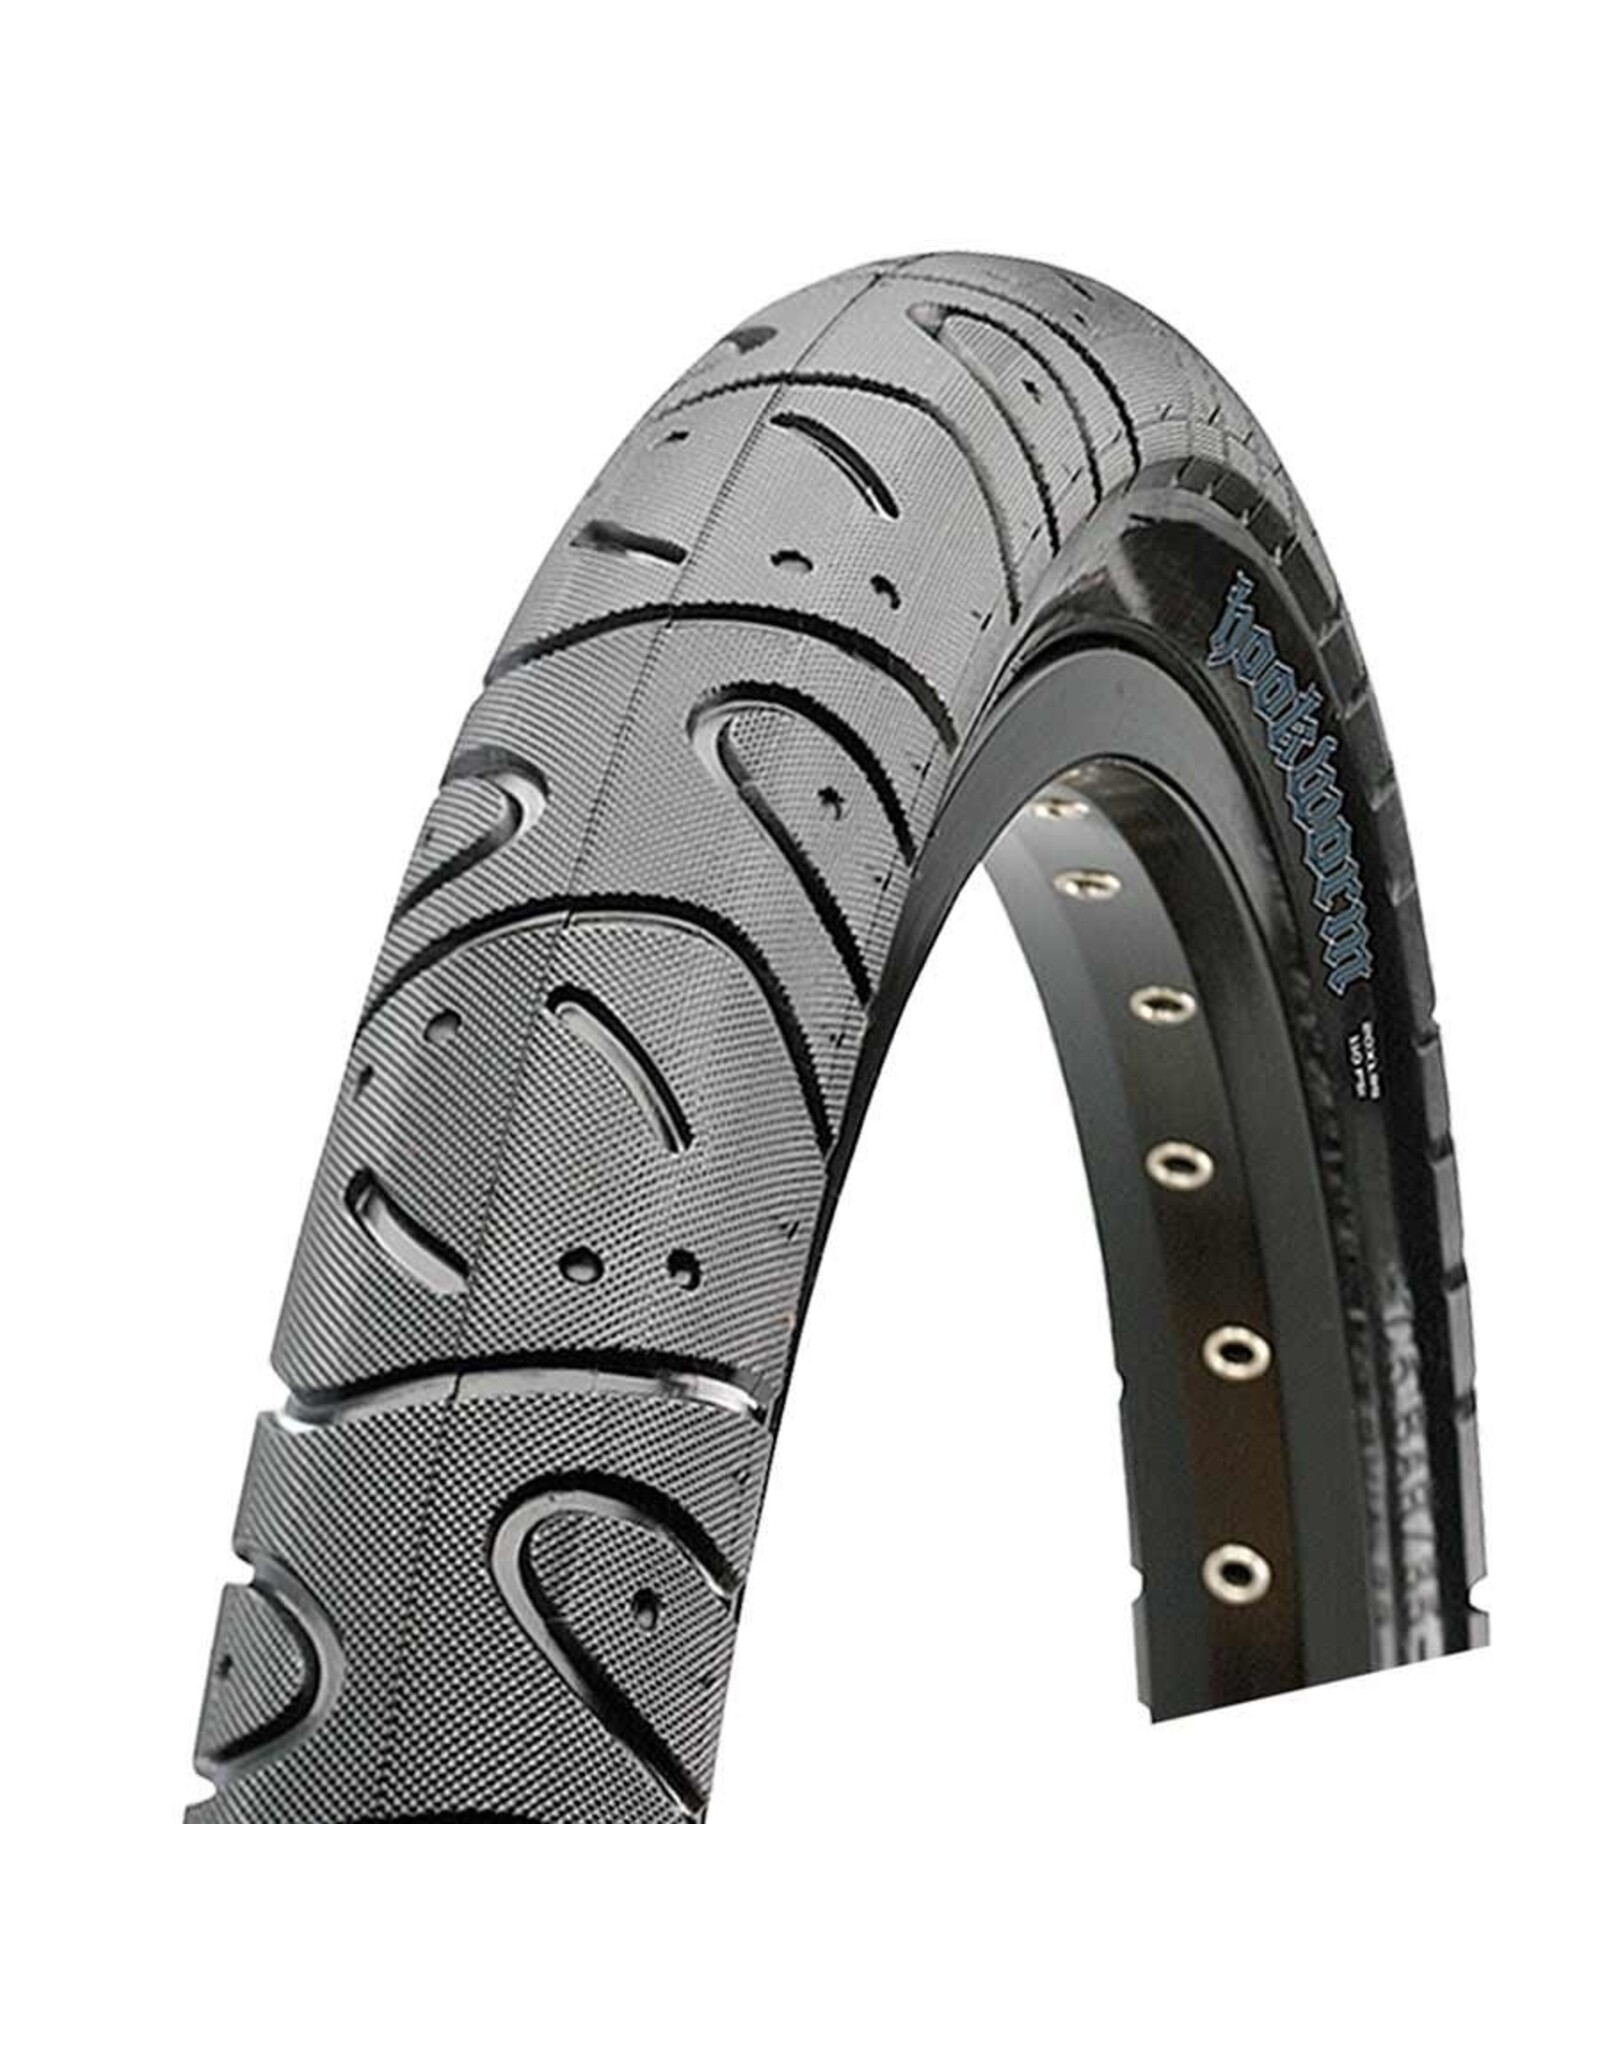 Maxxis Maxxis Hookworm Tire 20'' x 1.95 - Wire/Clincher - Black